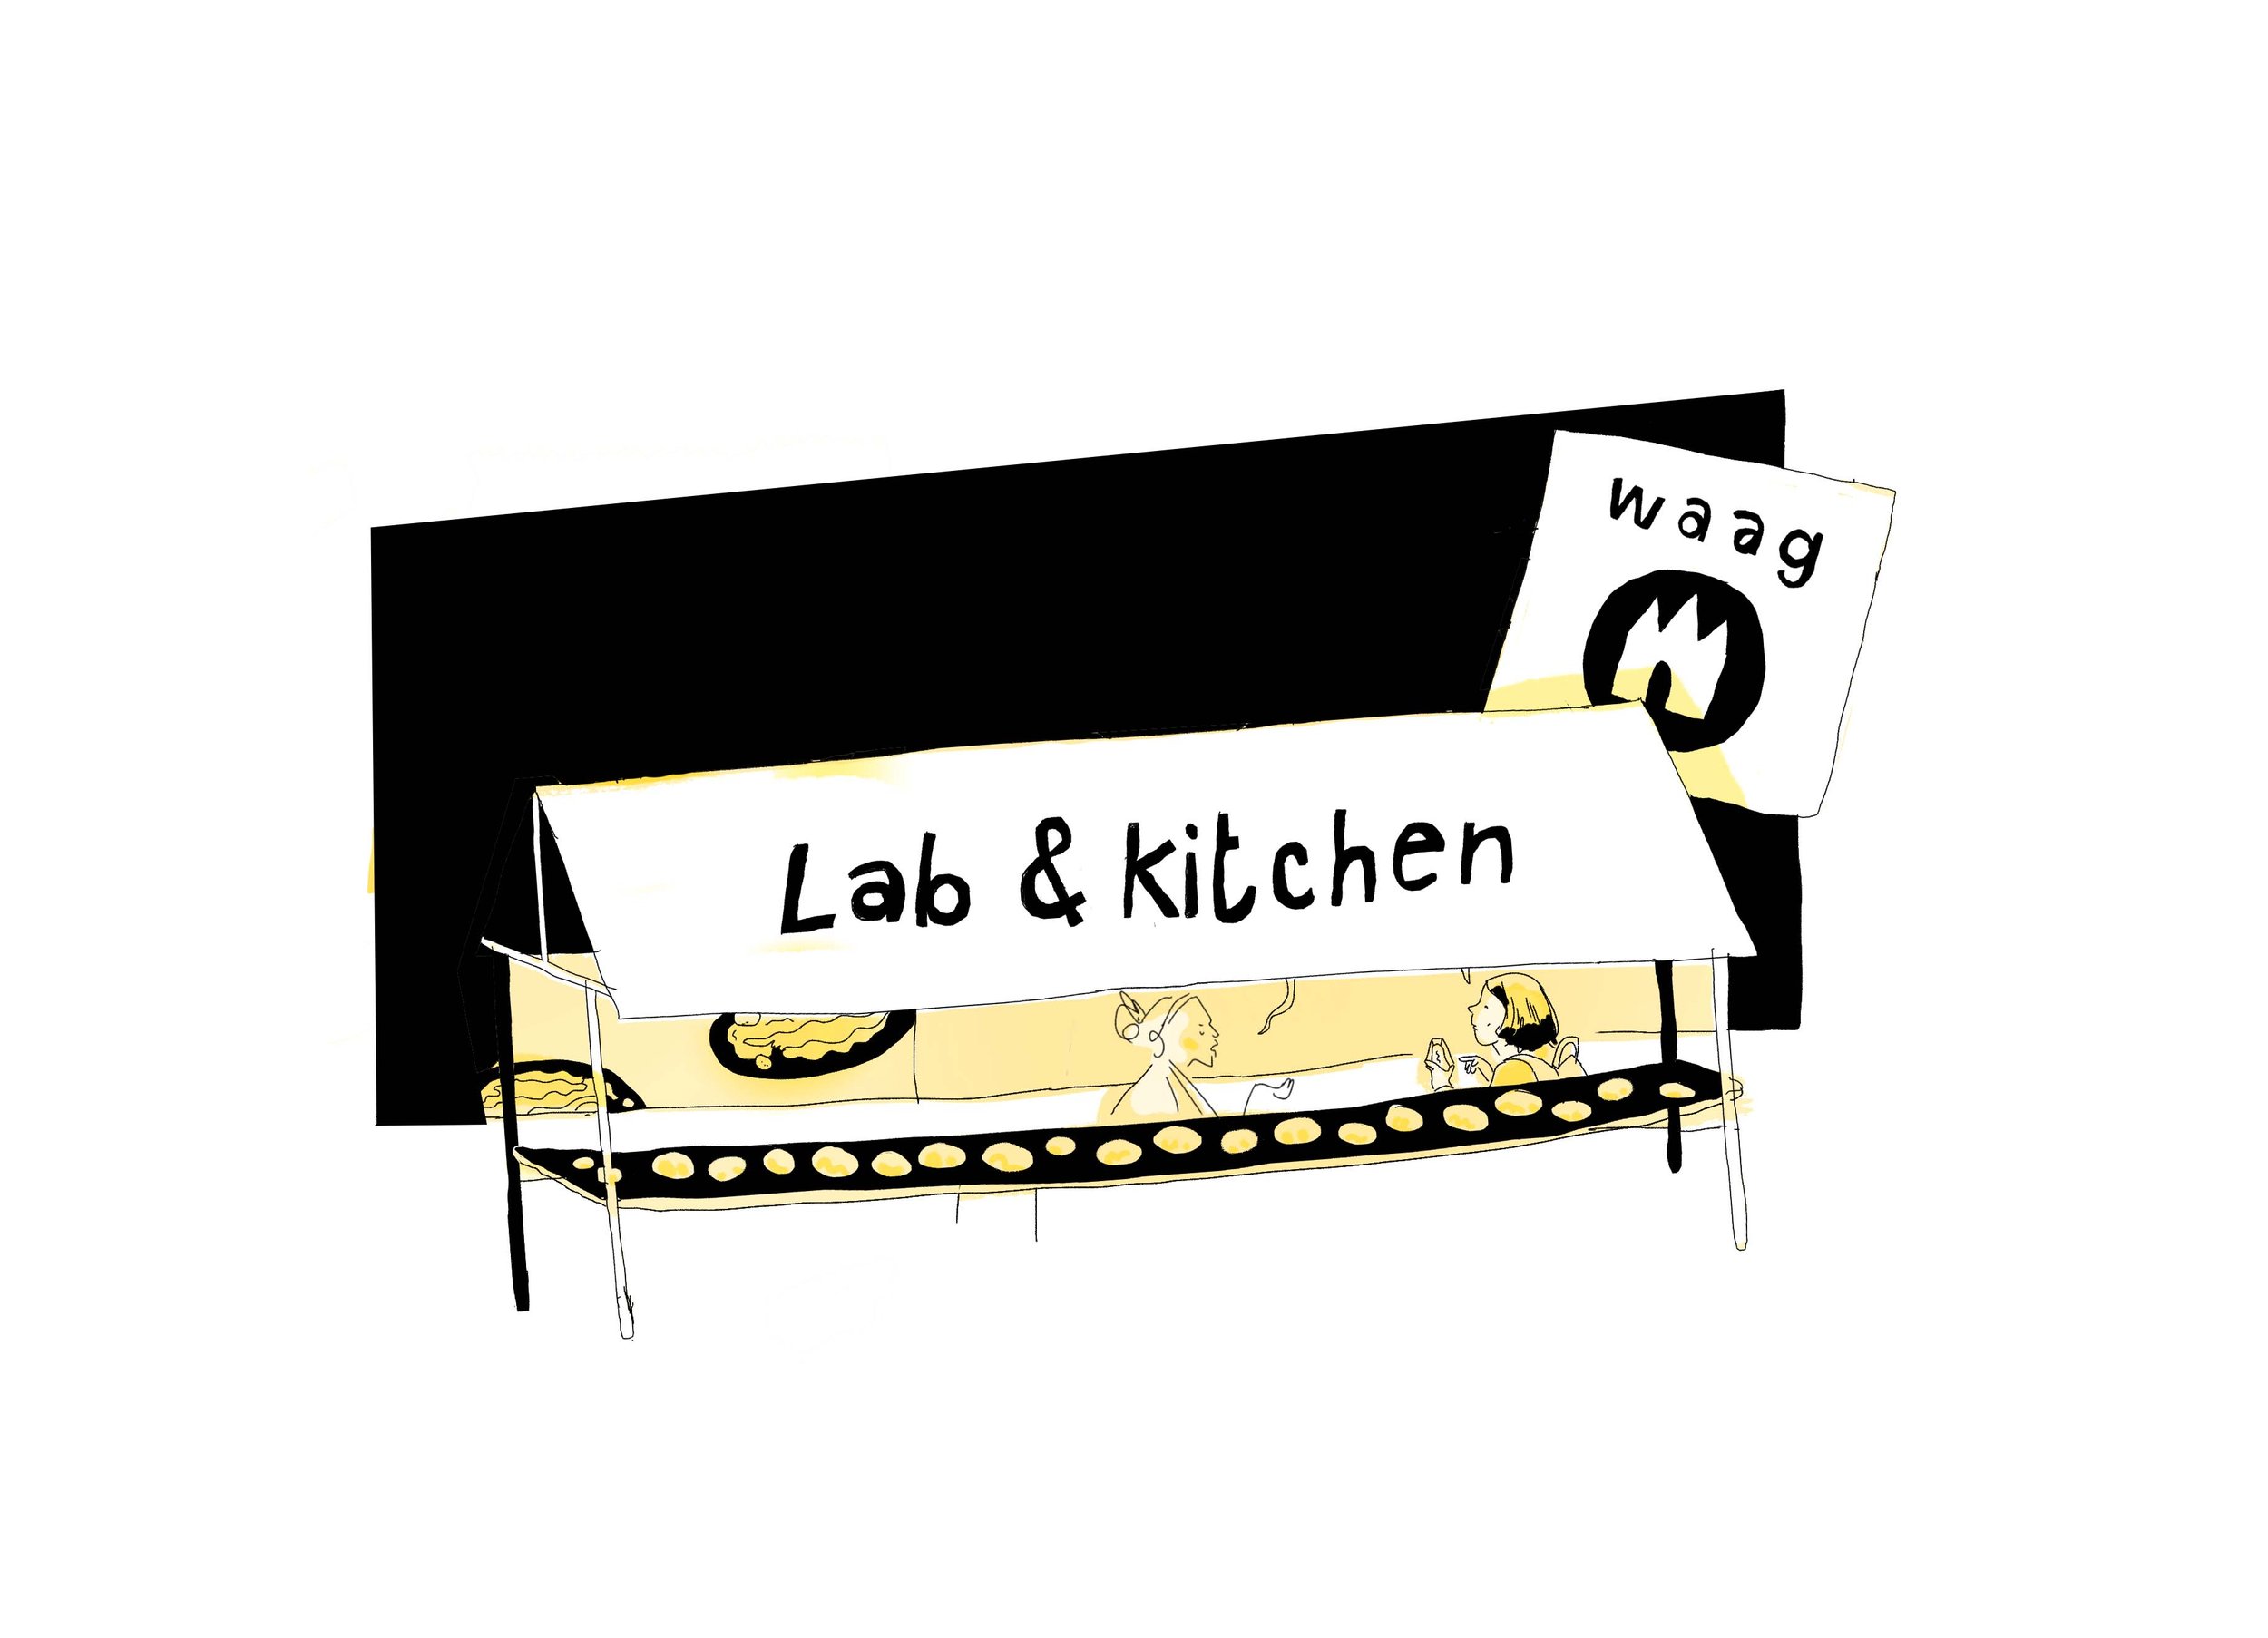 L&K lab&kitchen wit menah041021.jpg